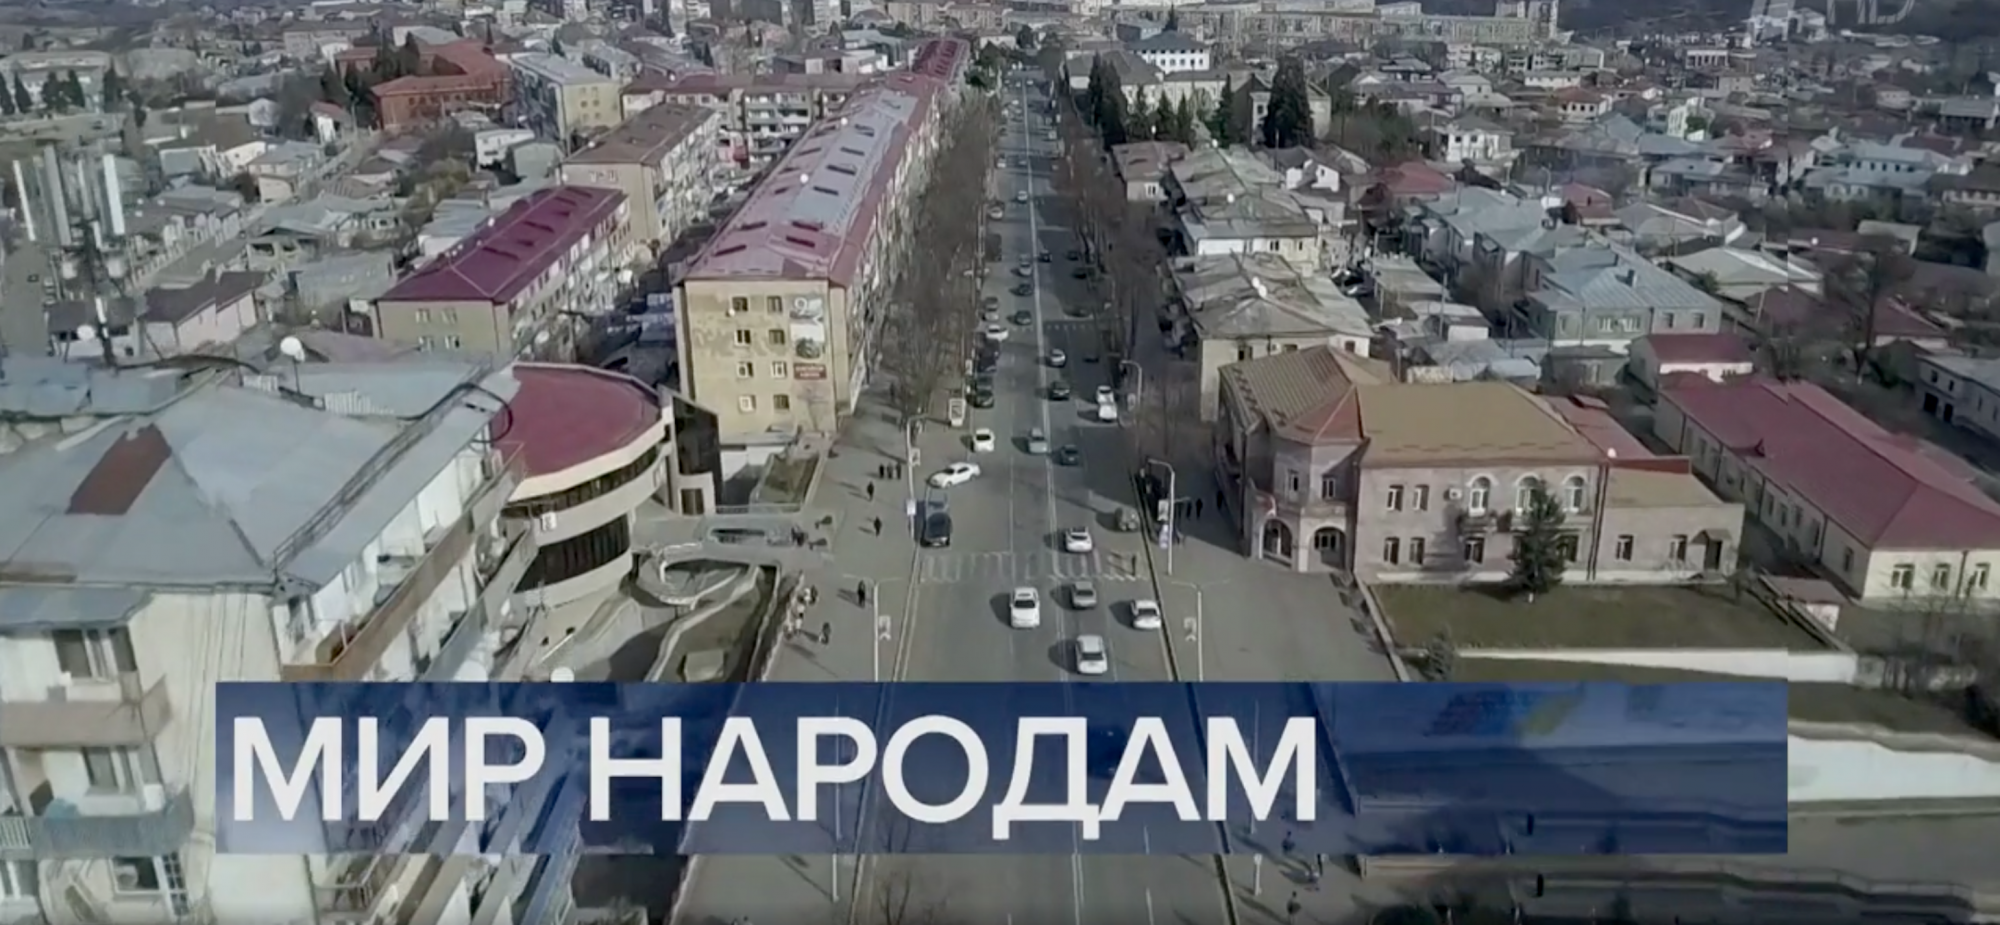 Russian TV Portrays Karabakh Move as Humanitarian, Political Success